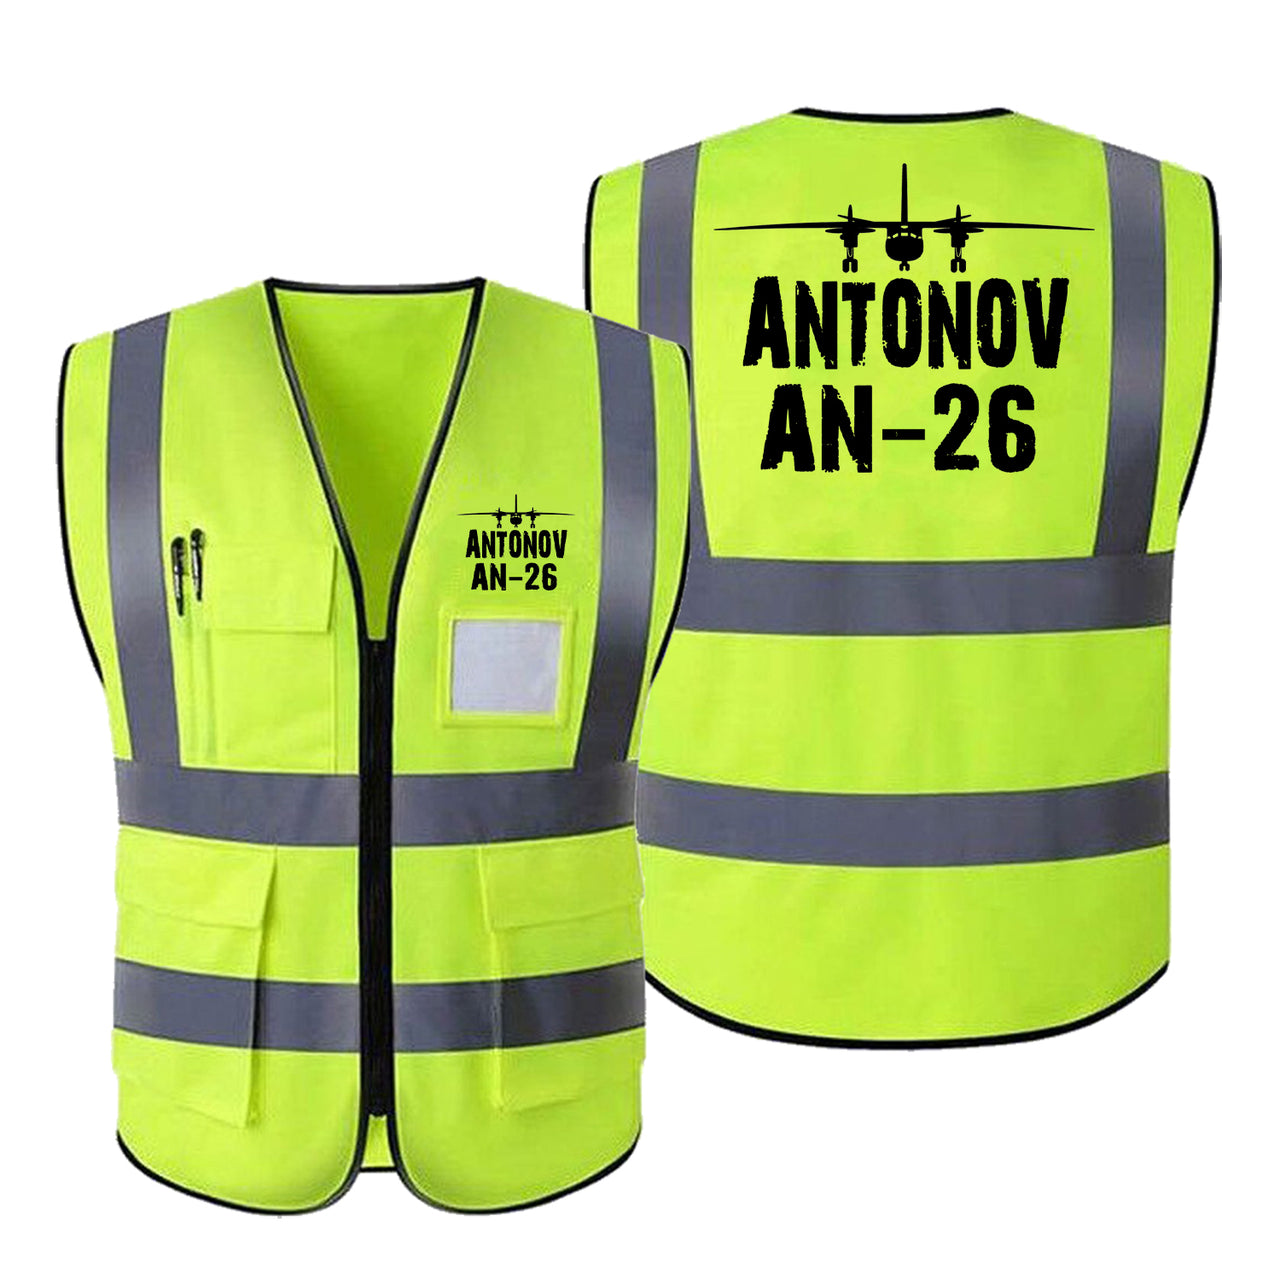 Antonov AN-26 & Plane Designed Reflective Vests